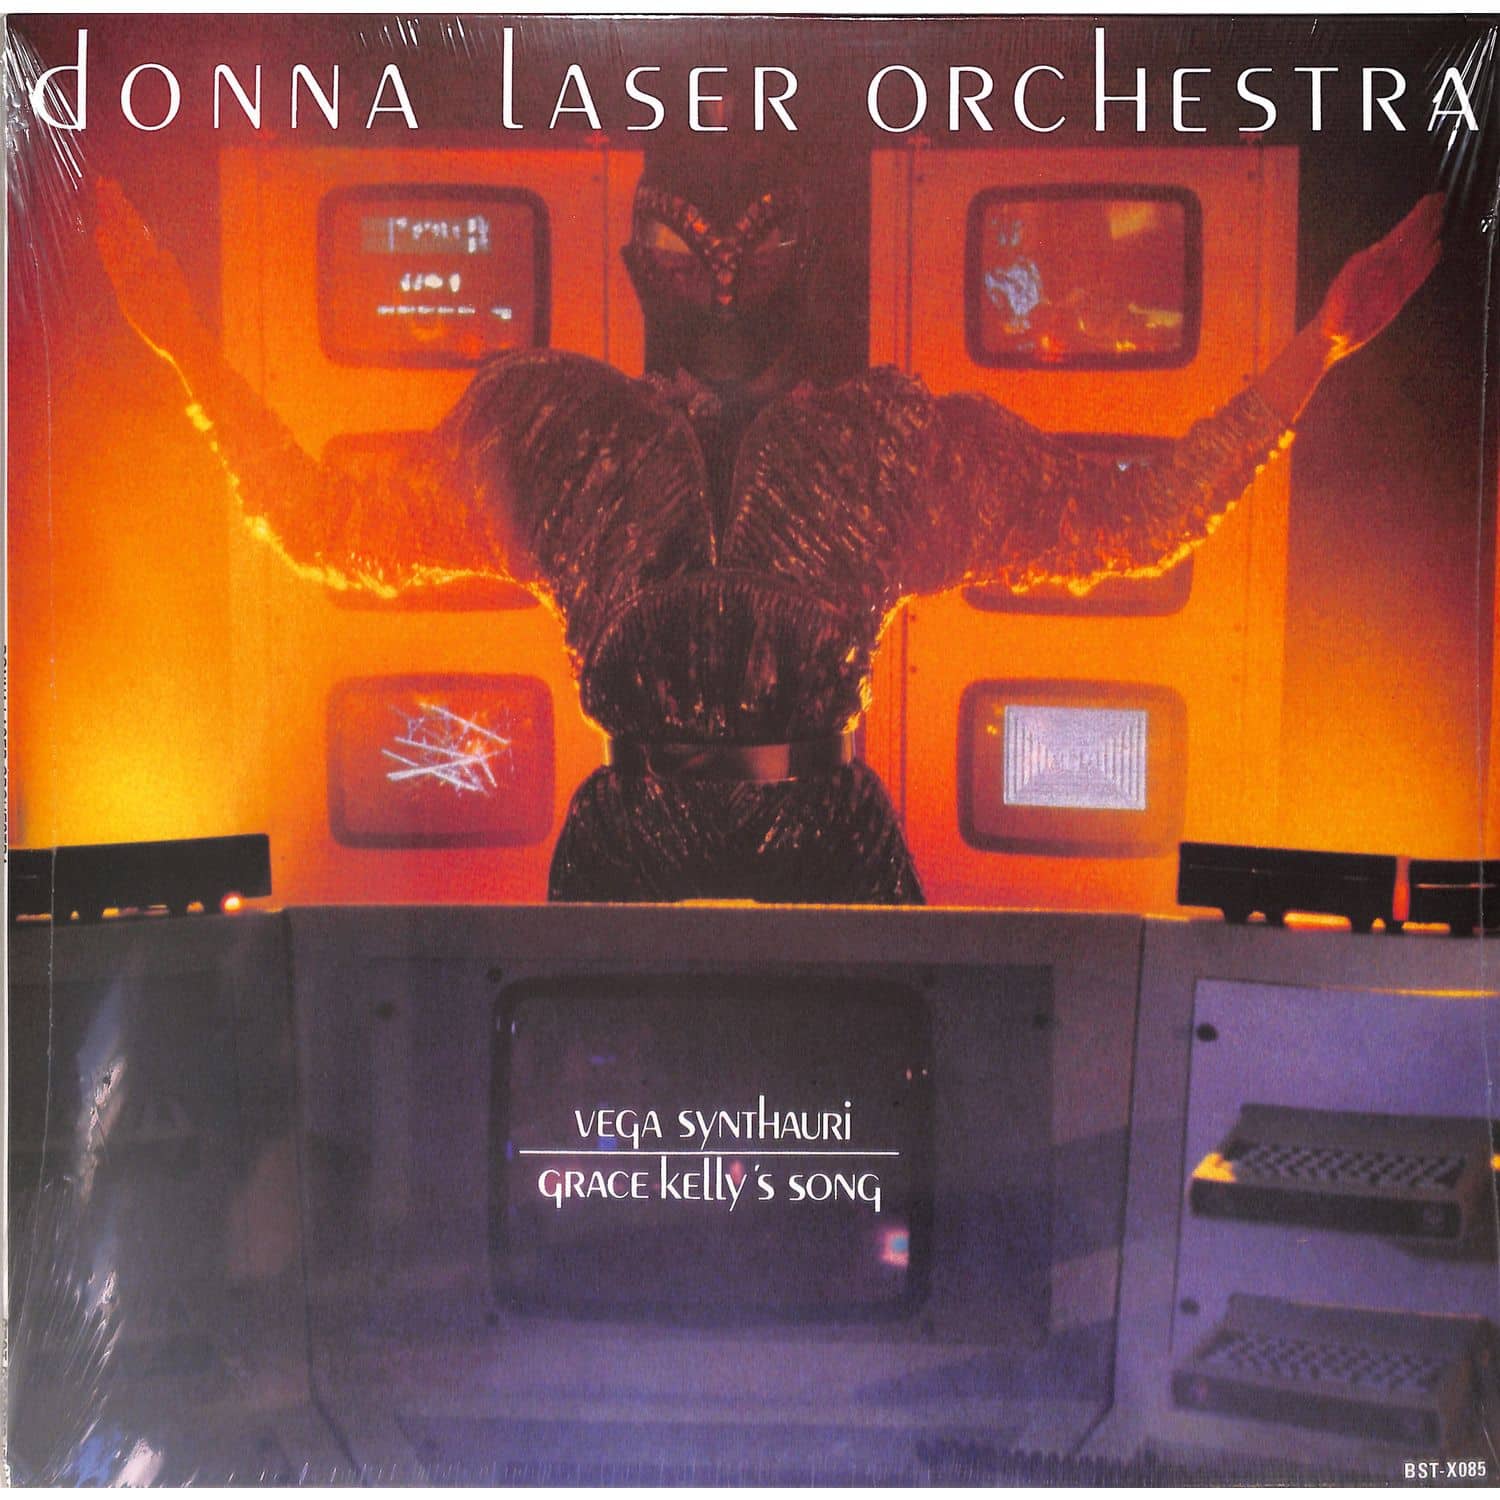 Donna Laser Orchestra - VEGA SYNTHAURI / GRACE KELLYS SONG